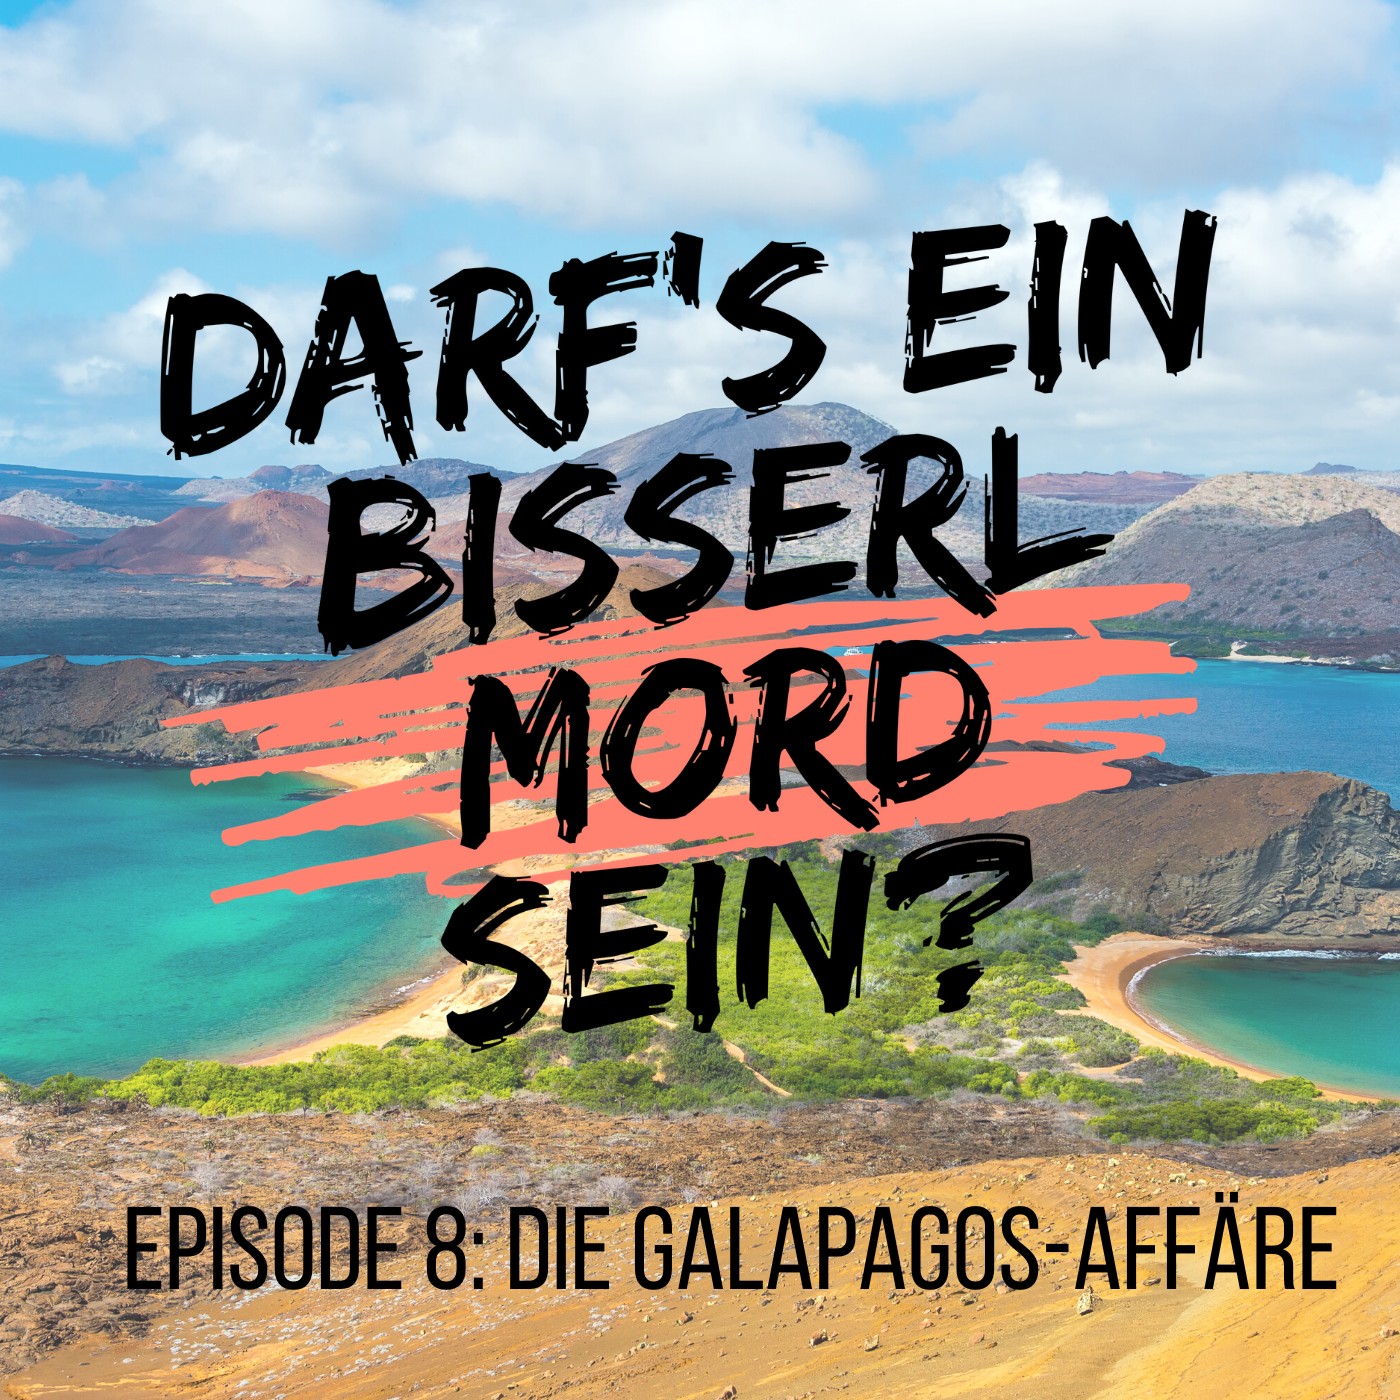 Episode 8: Die Galapagos-Affäre